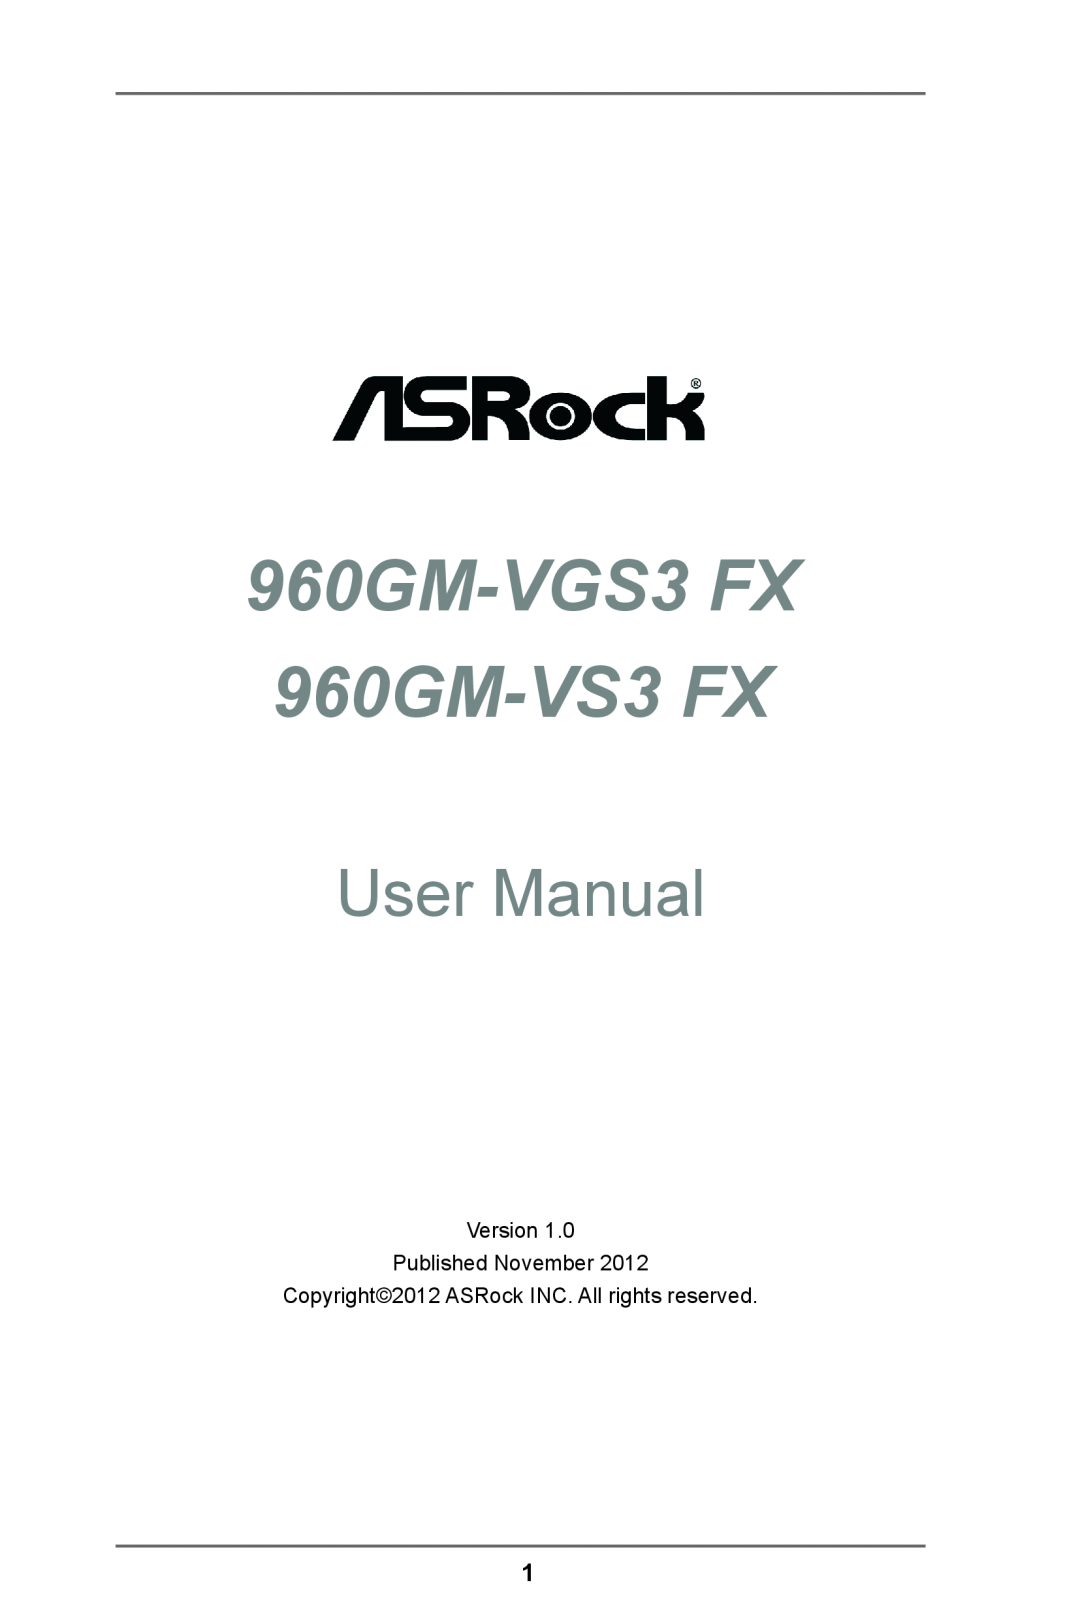 ASRock manual 960GM-VGS3 FX 960GM-VS3 FX, User Manual 